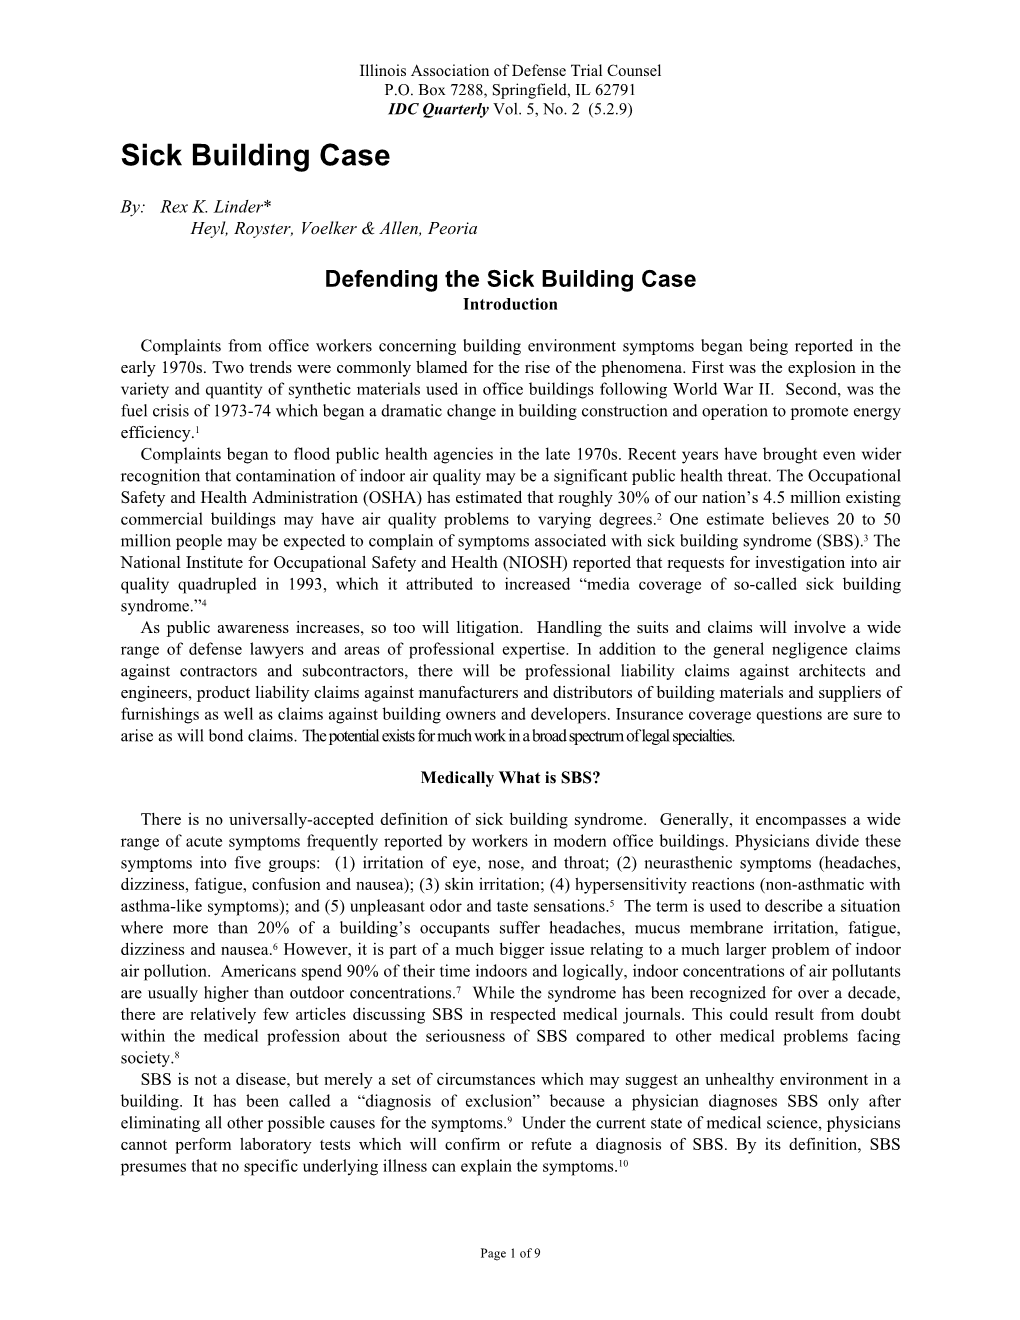 Sick Building Case